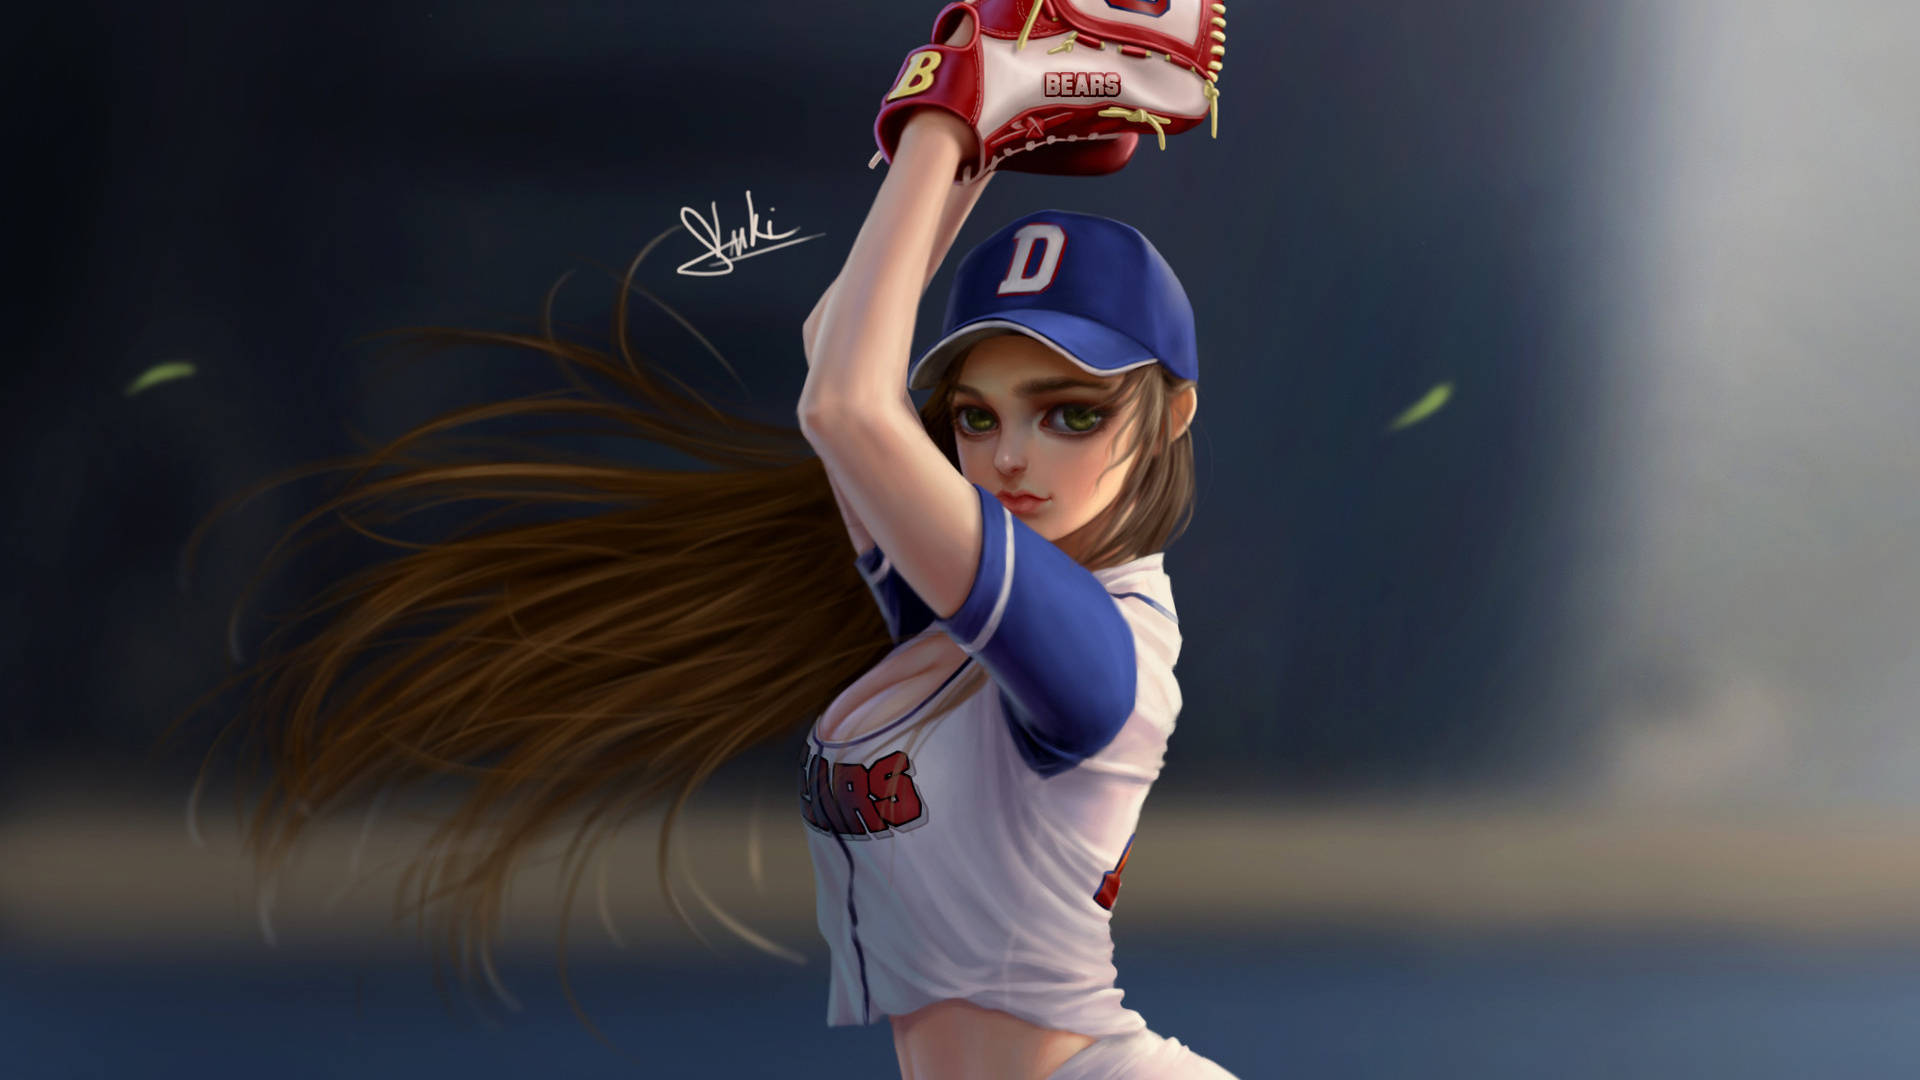 Cute Softball Anime Player Background